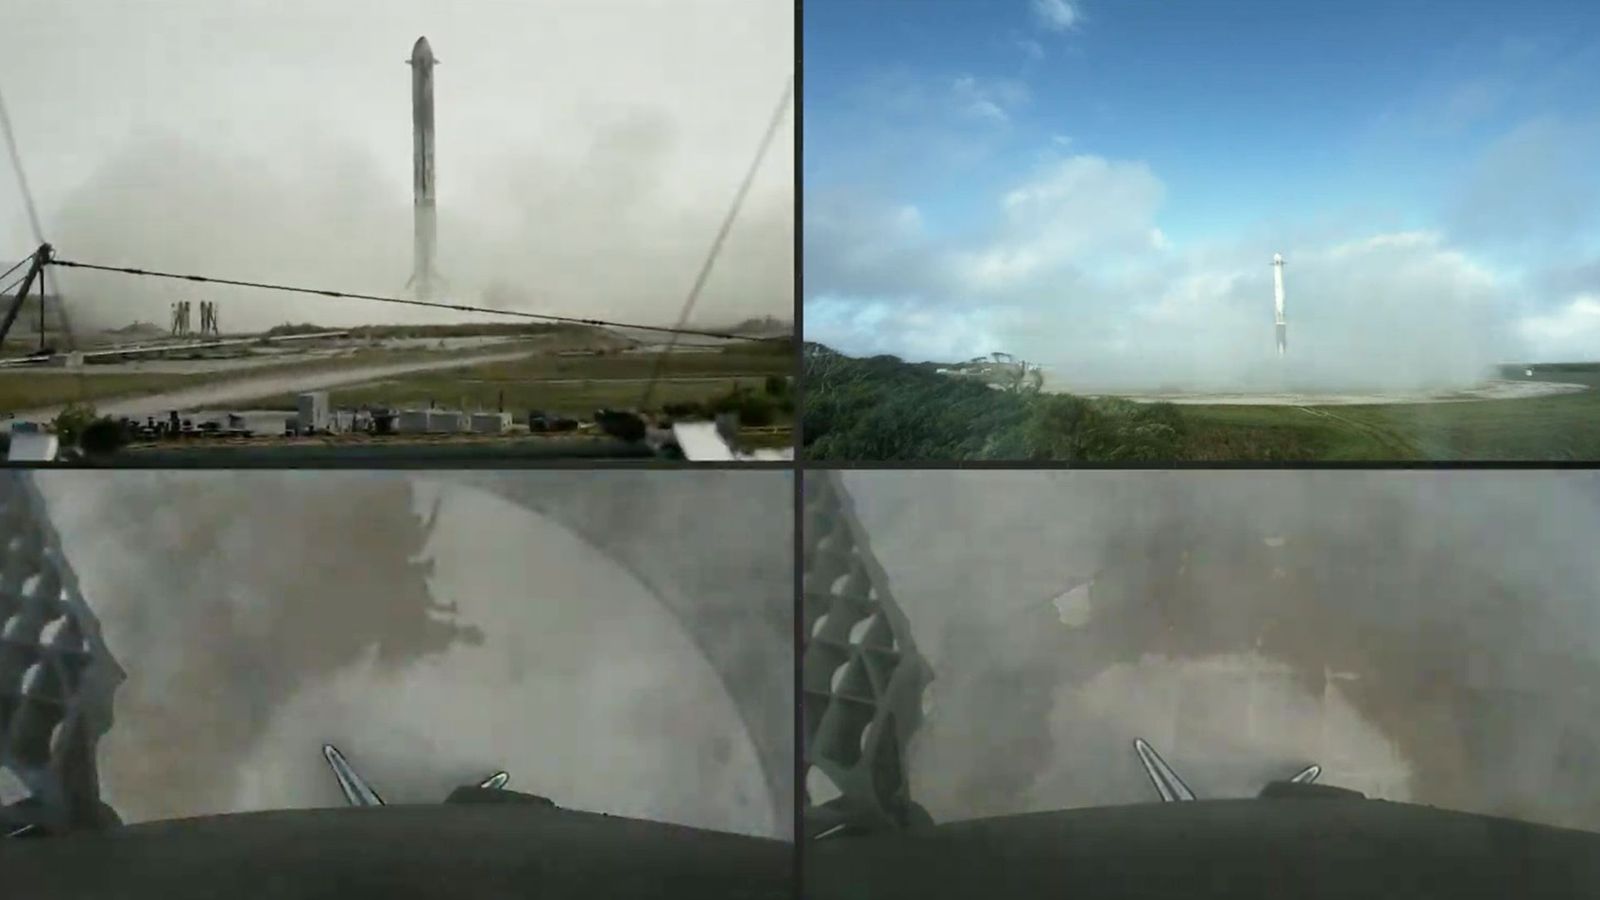 SpaceX تطلق صاروخها القوي Falcon Heavy من مركز الفضاء التابع لناسا في مهمة تاريخية |  أخبار العلوم والتكنولوجيا